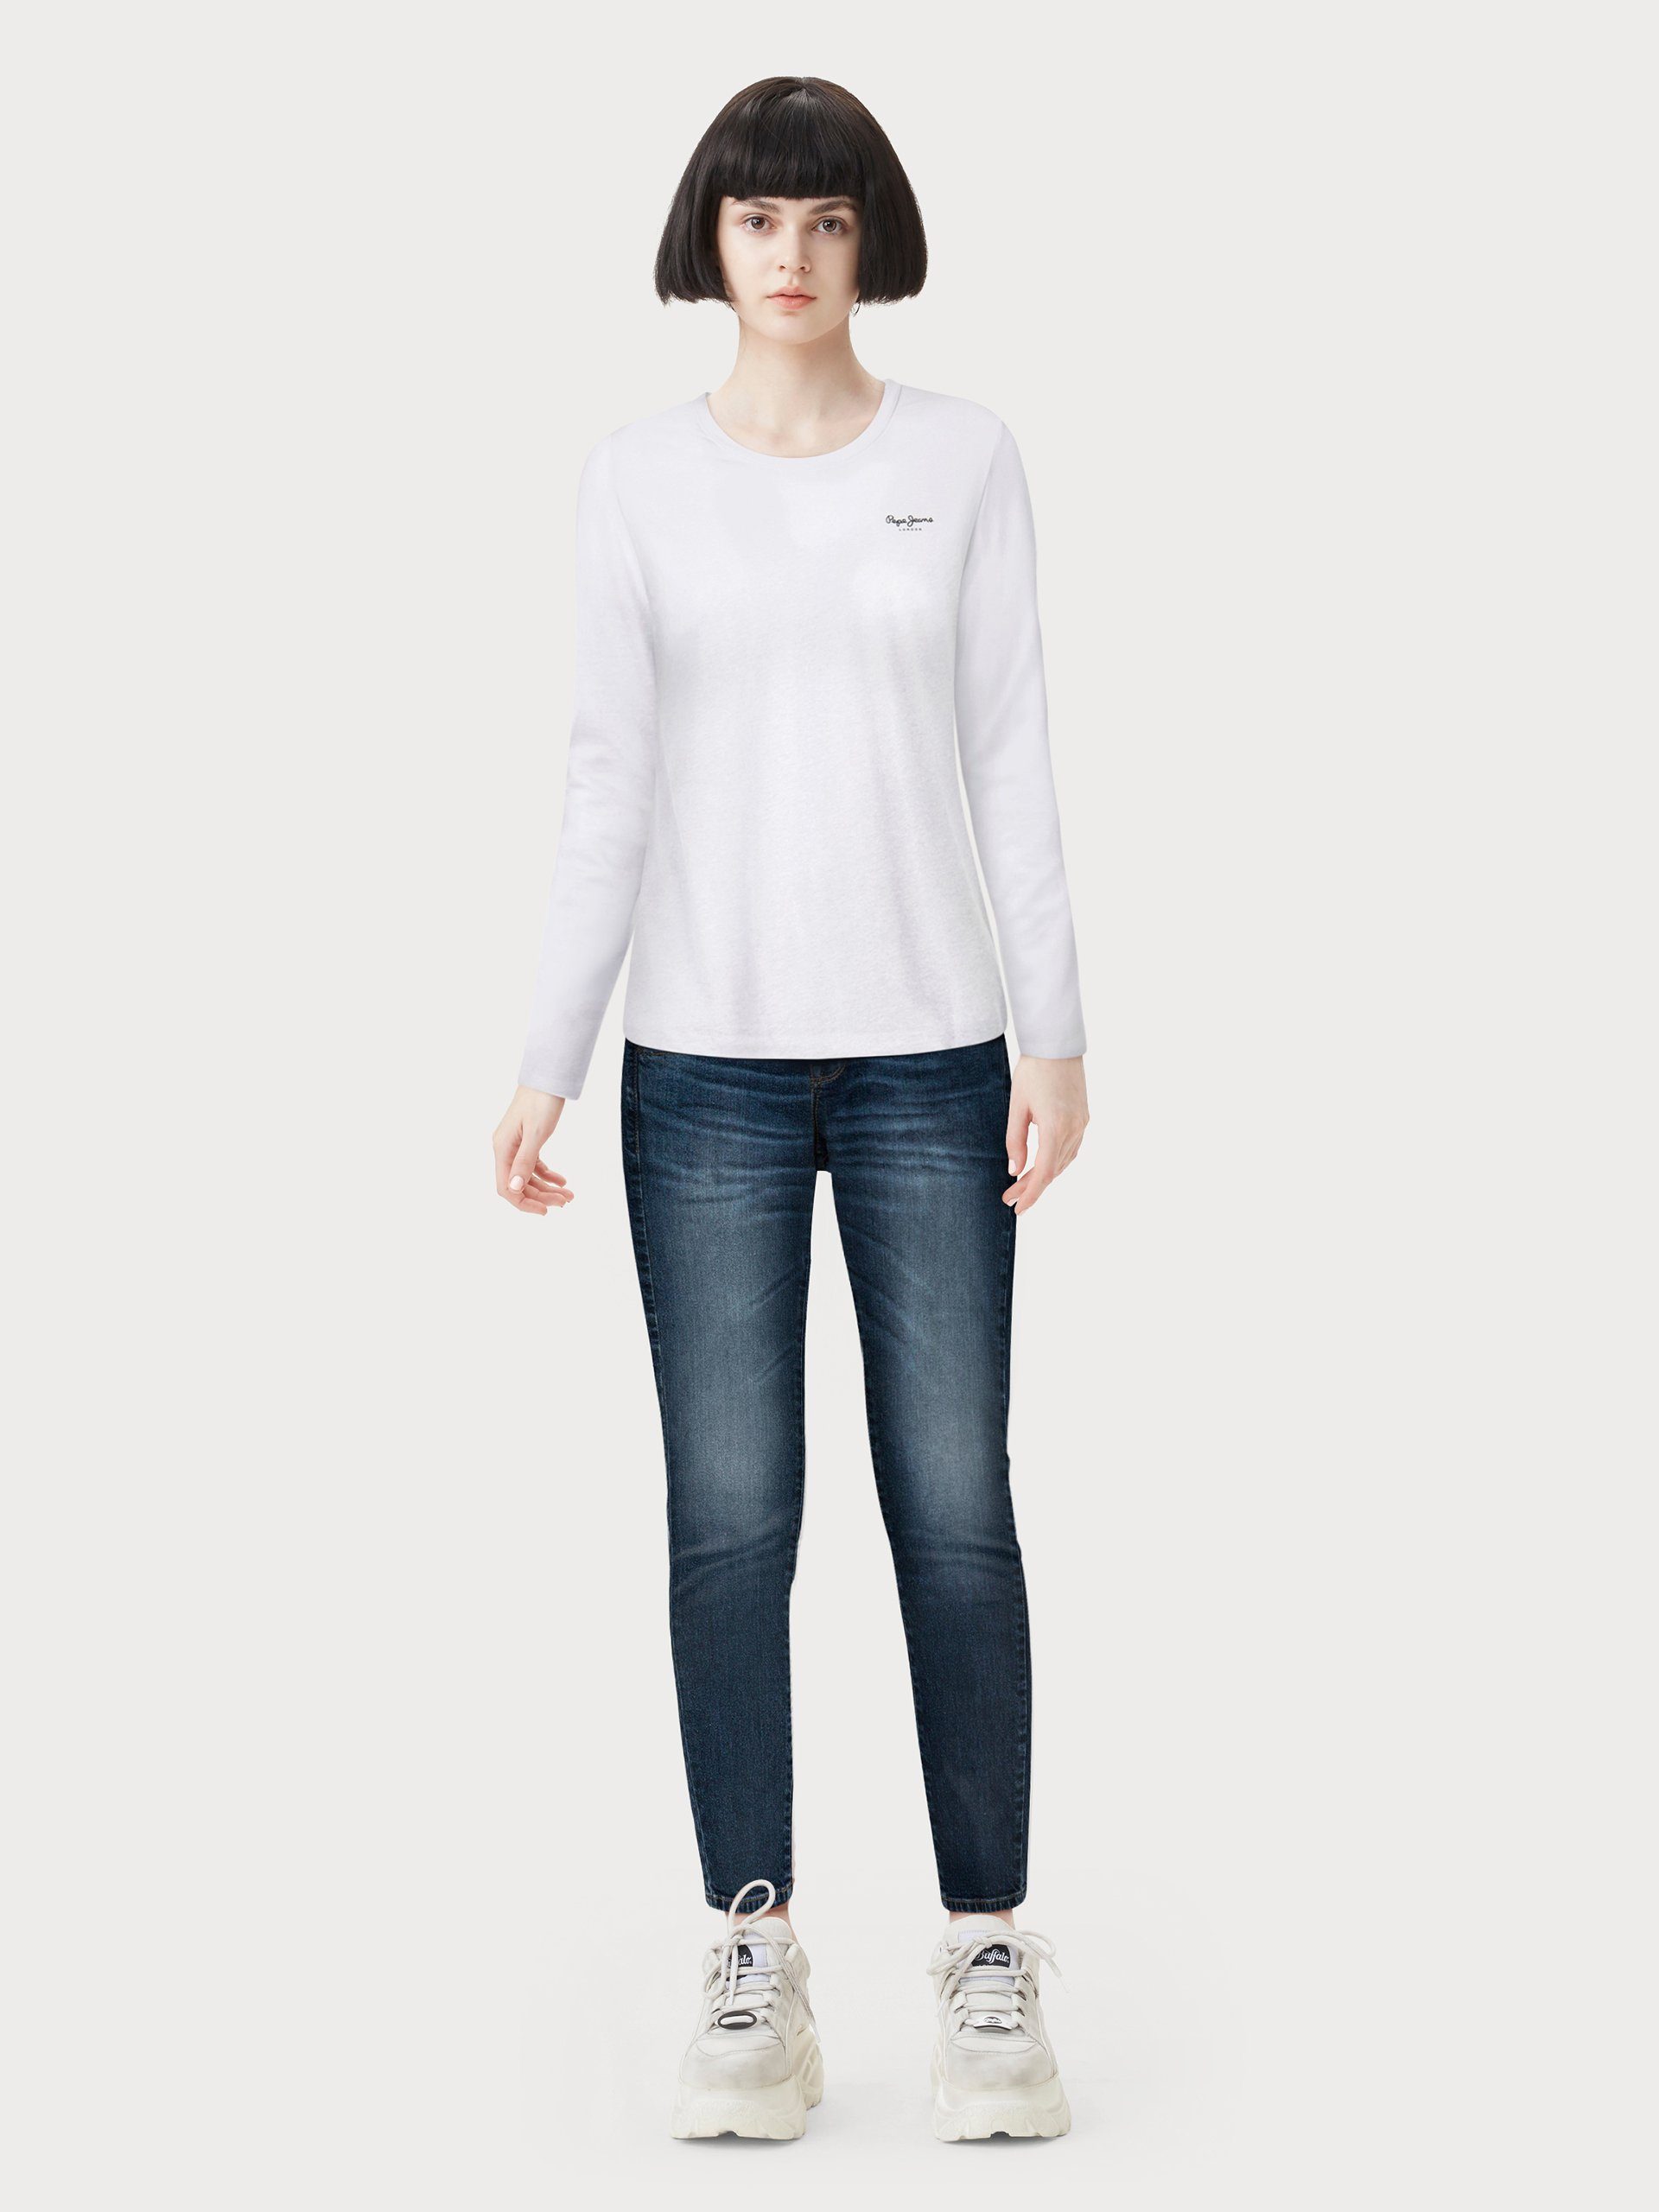 kleinem im Jeans Brustbereich AMBERTA Pepe N 8WHITE Langarmshirt Marken-Logo-Print mit